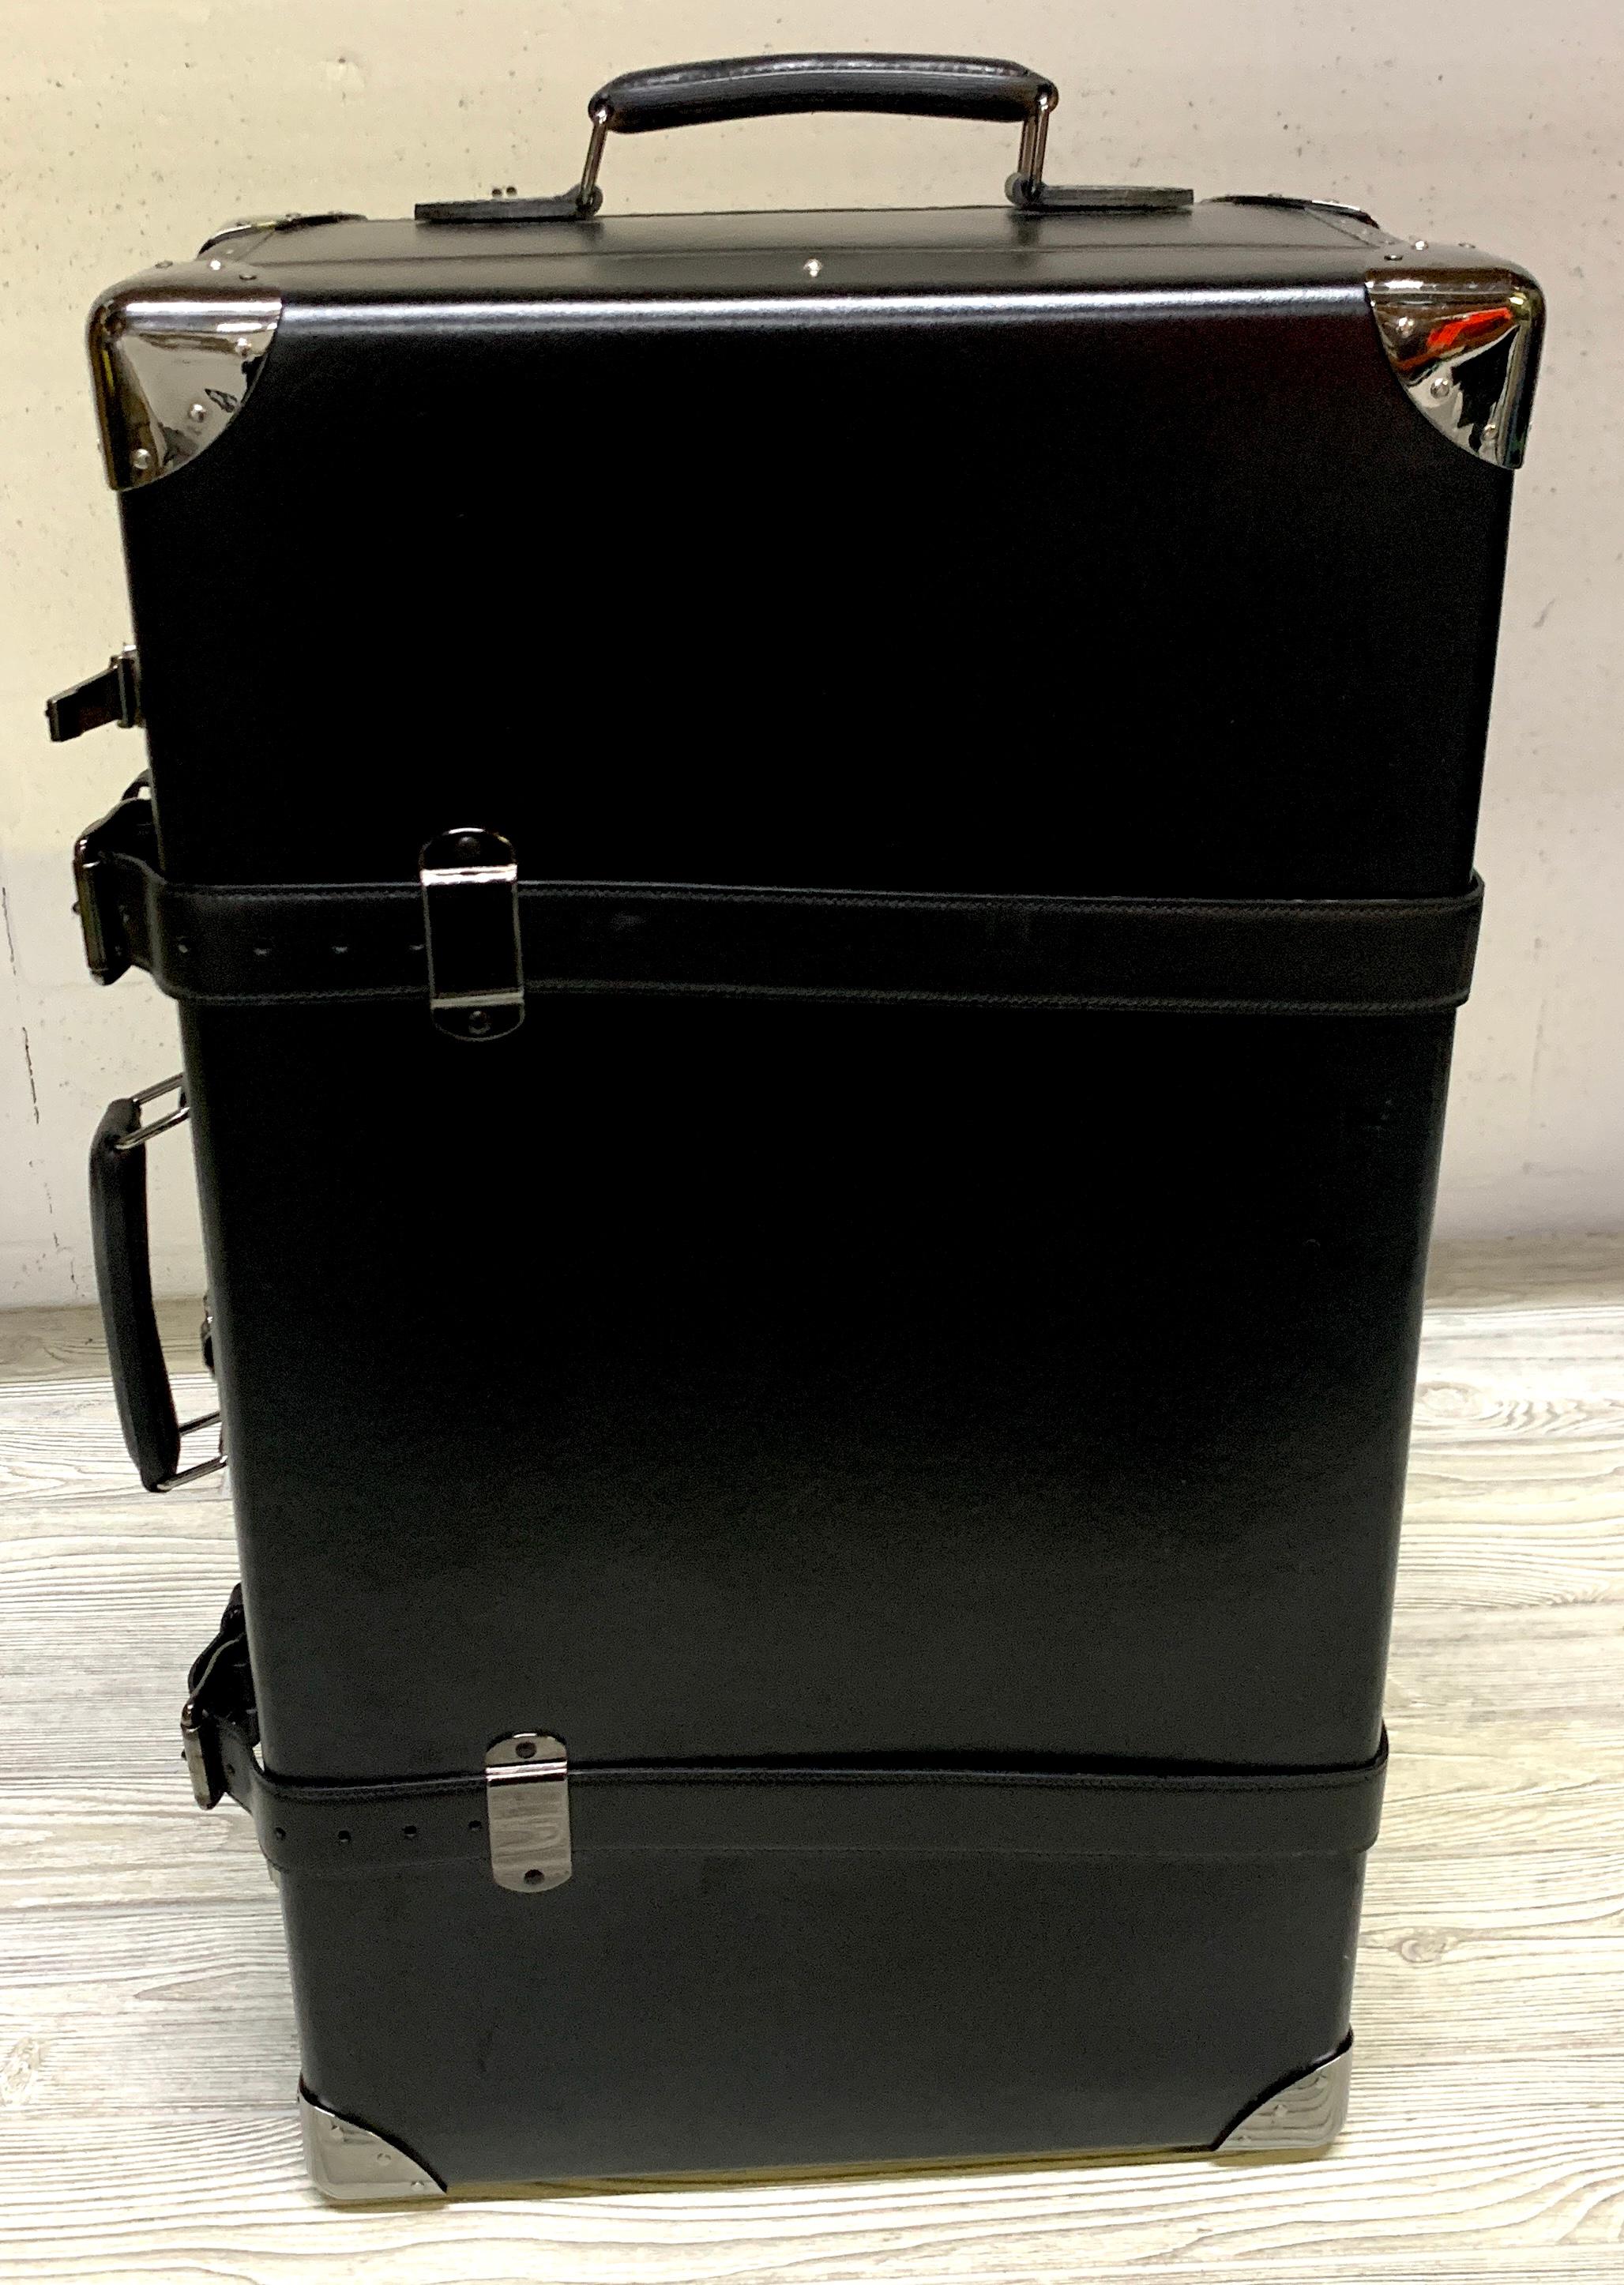 Contemporary Asprey Londoner Trolley, Black Cross Hatch Suitcase For Sale